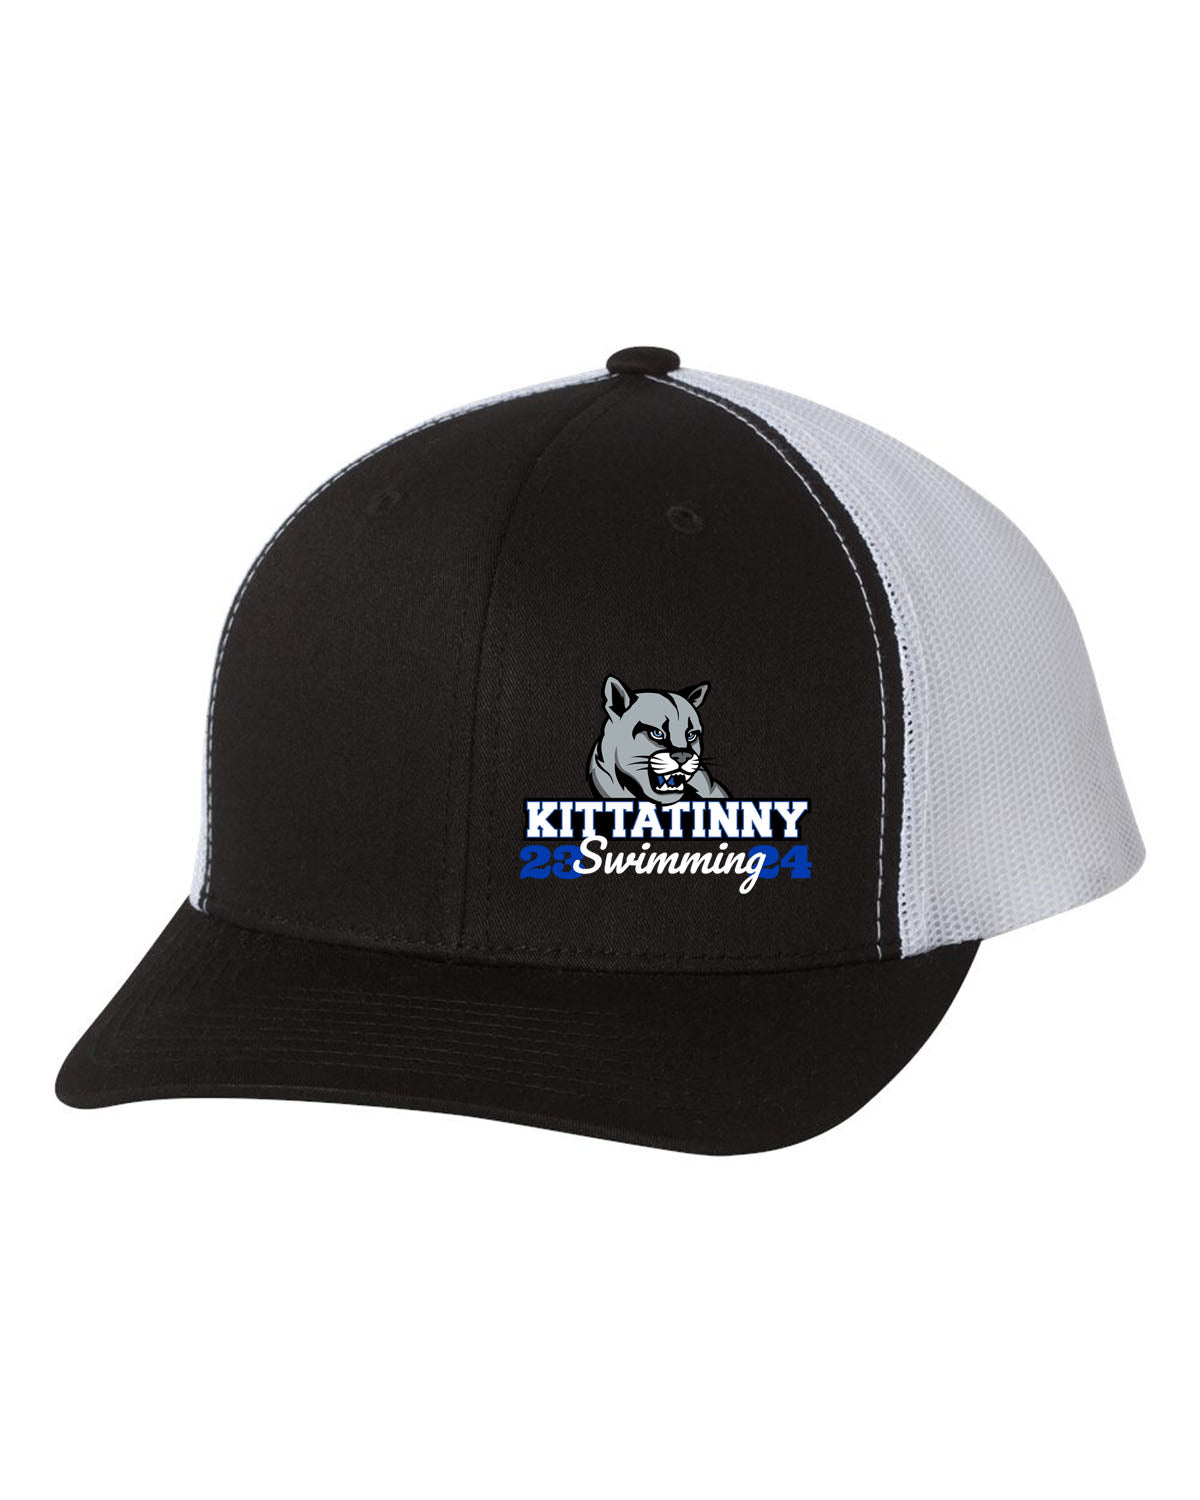 Kittatinny Swimming Design 2 Trucker Hat